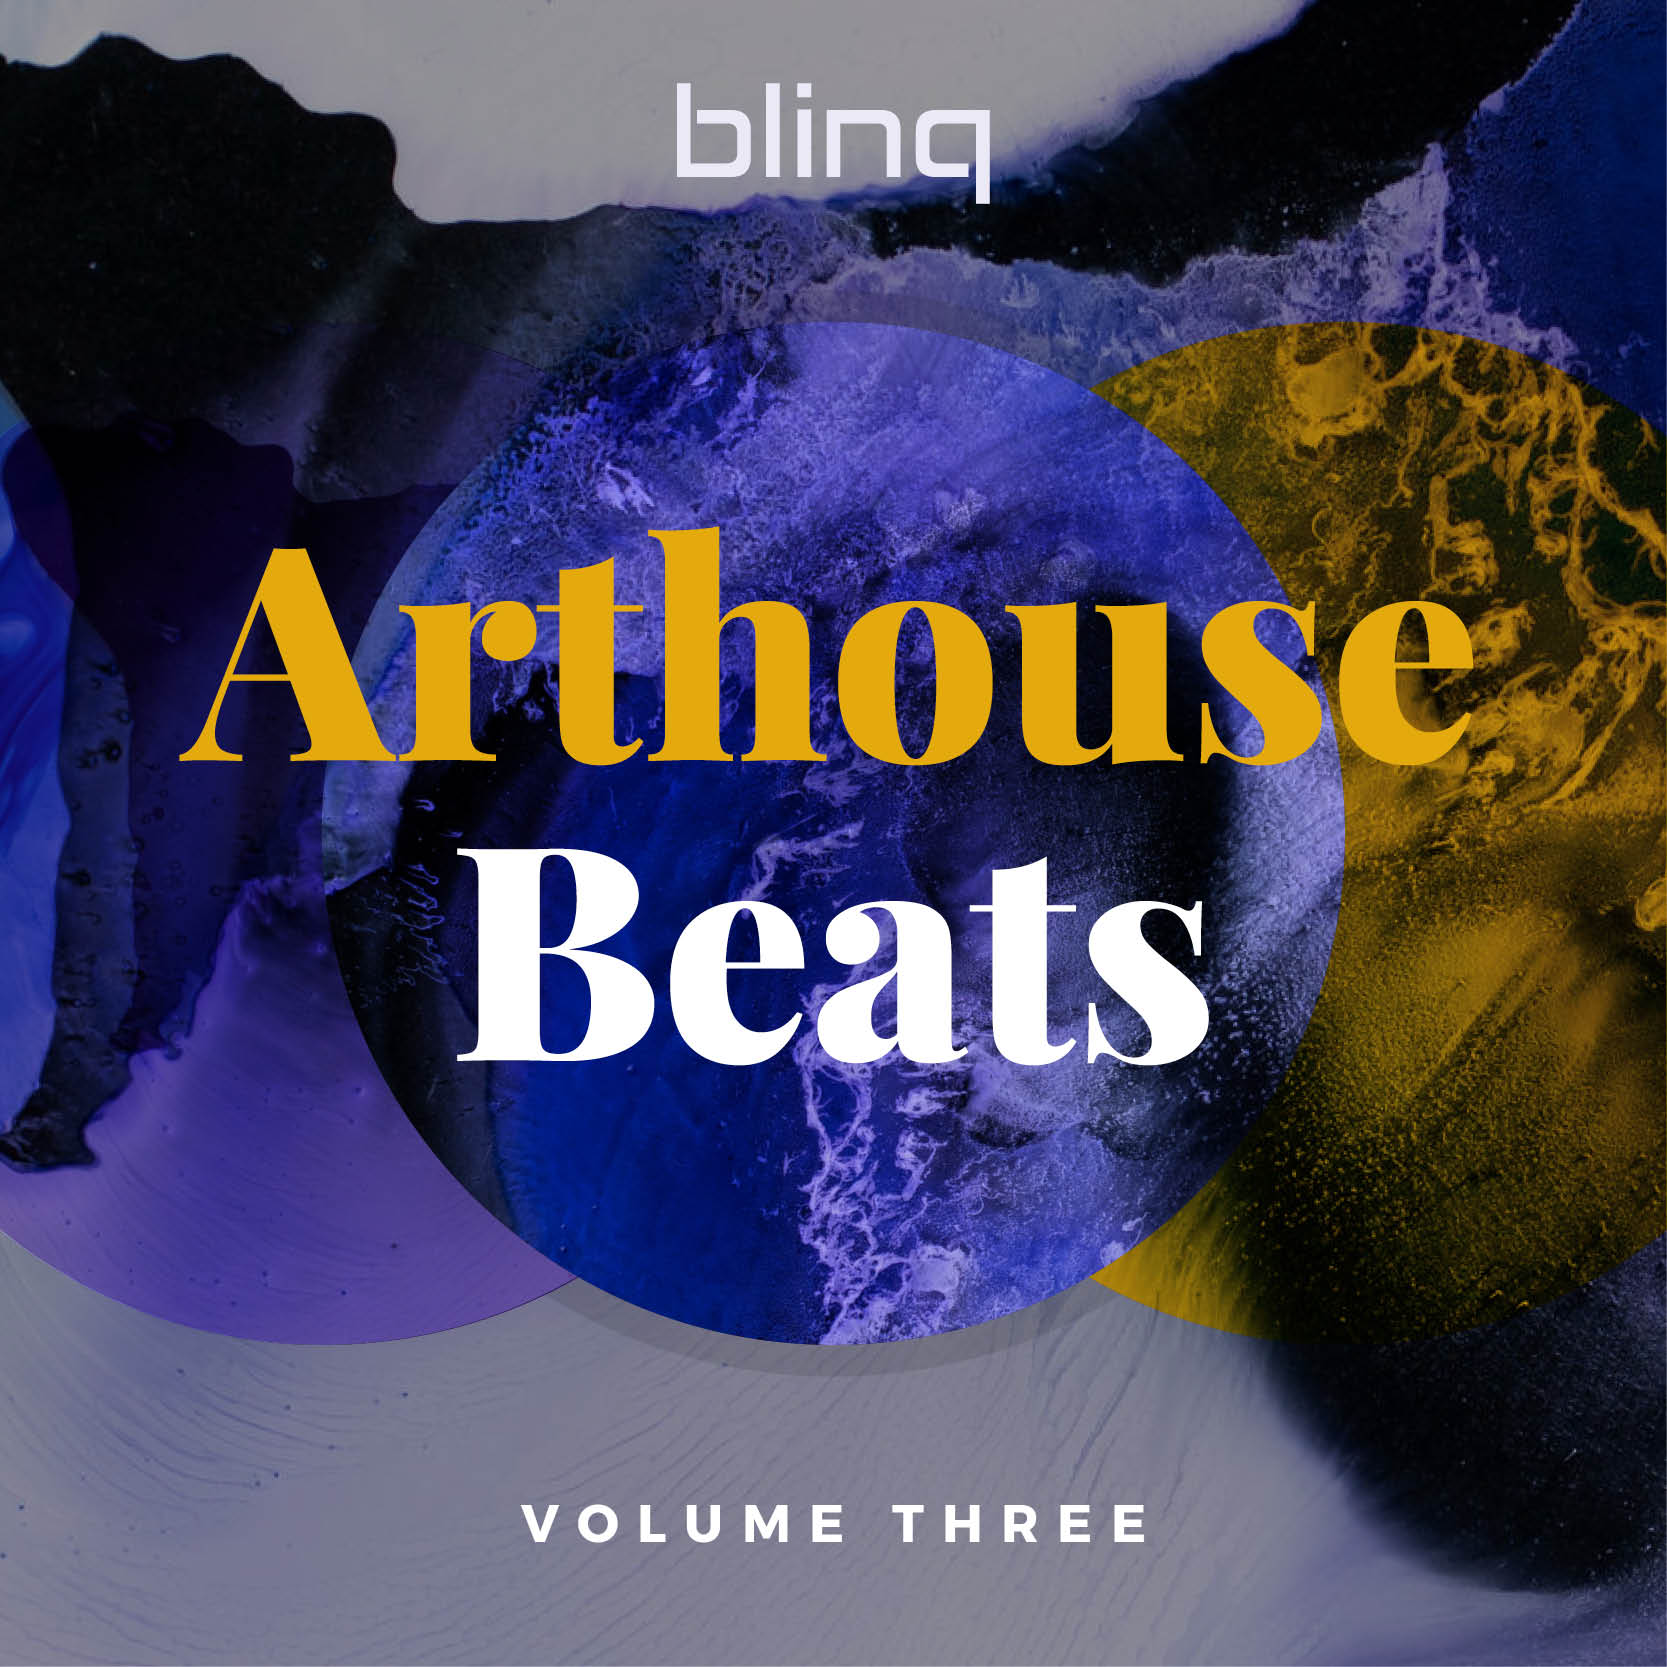 Arthouse Beats vol.3